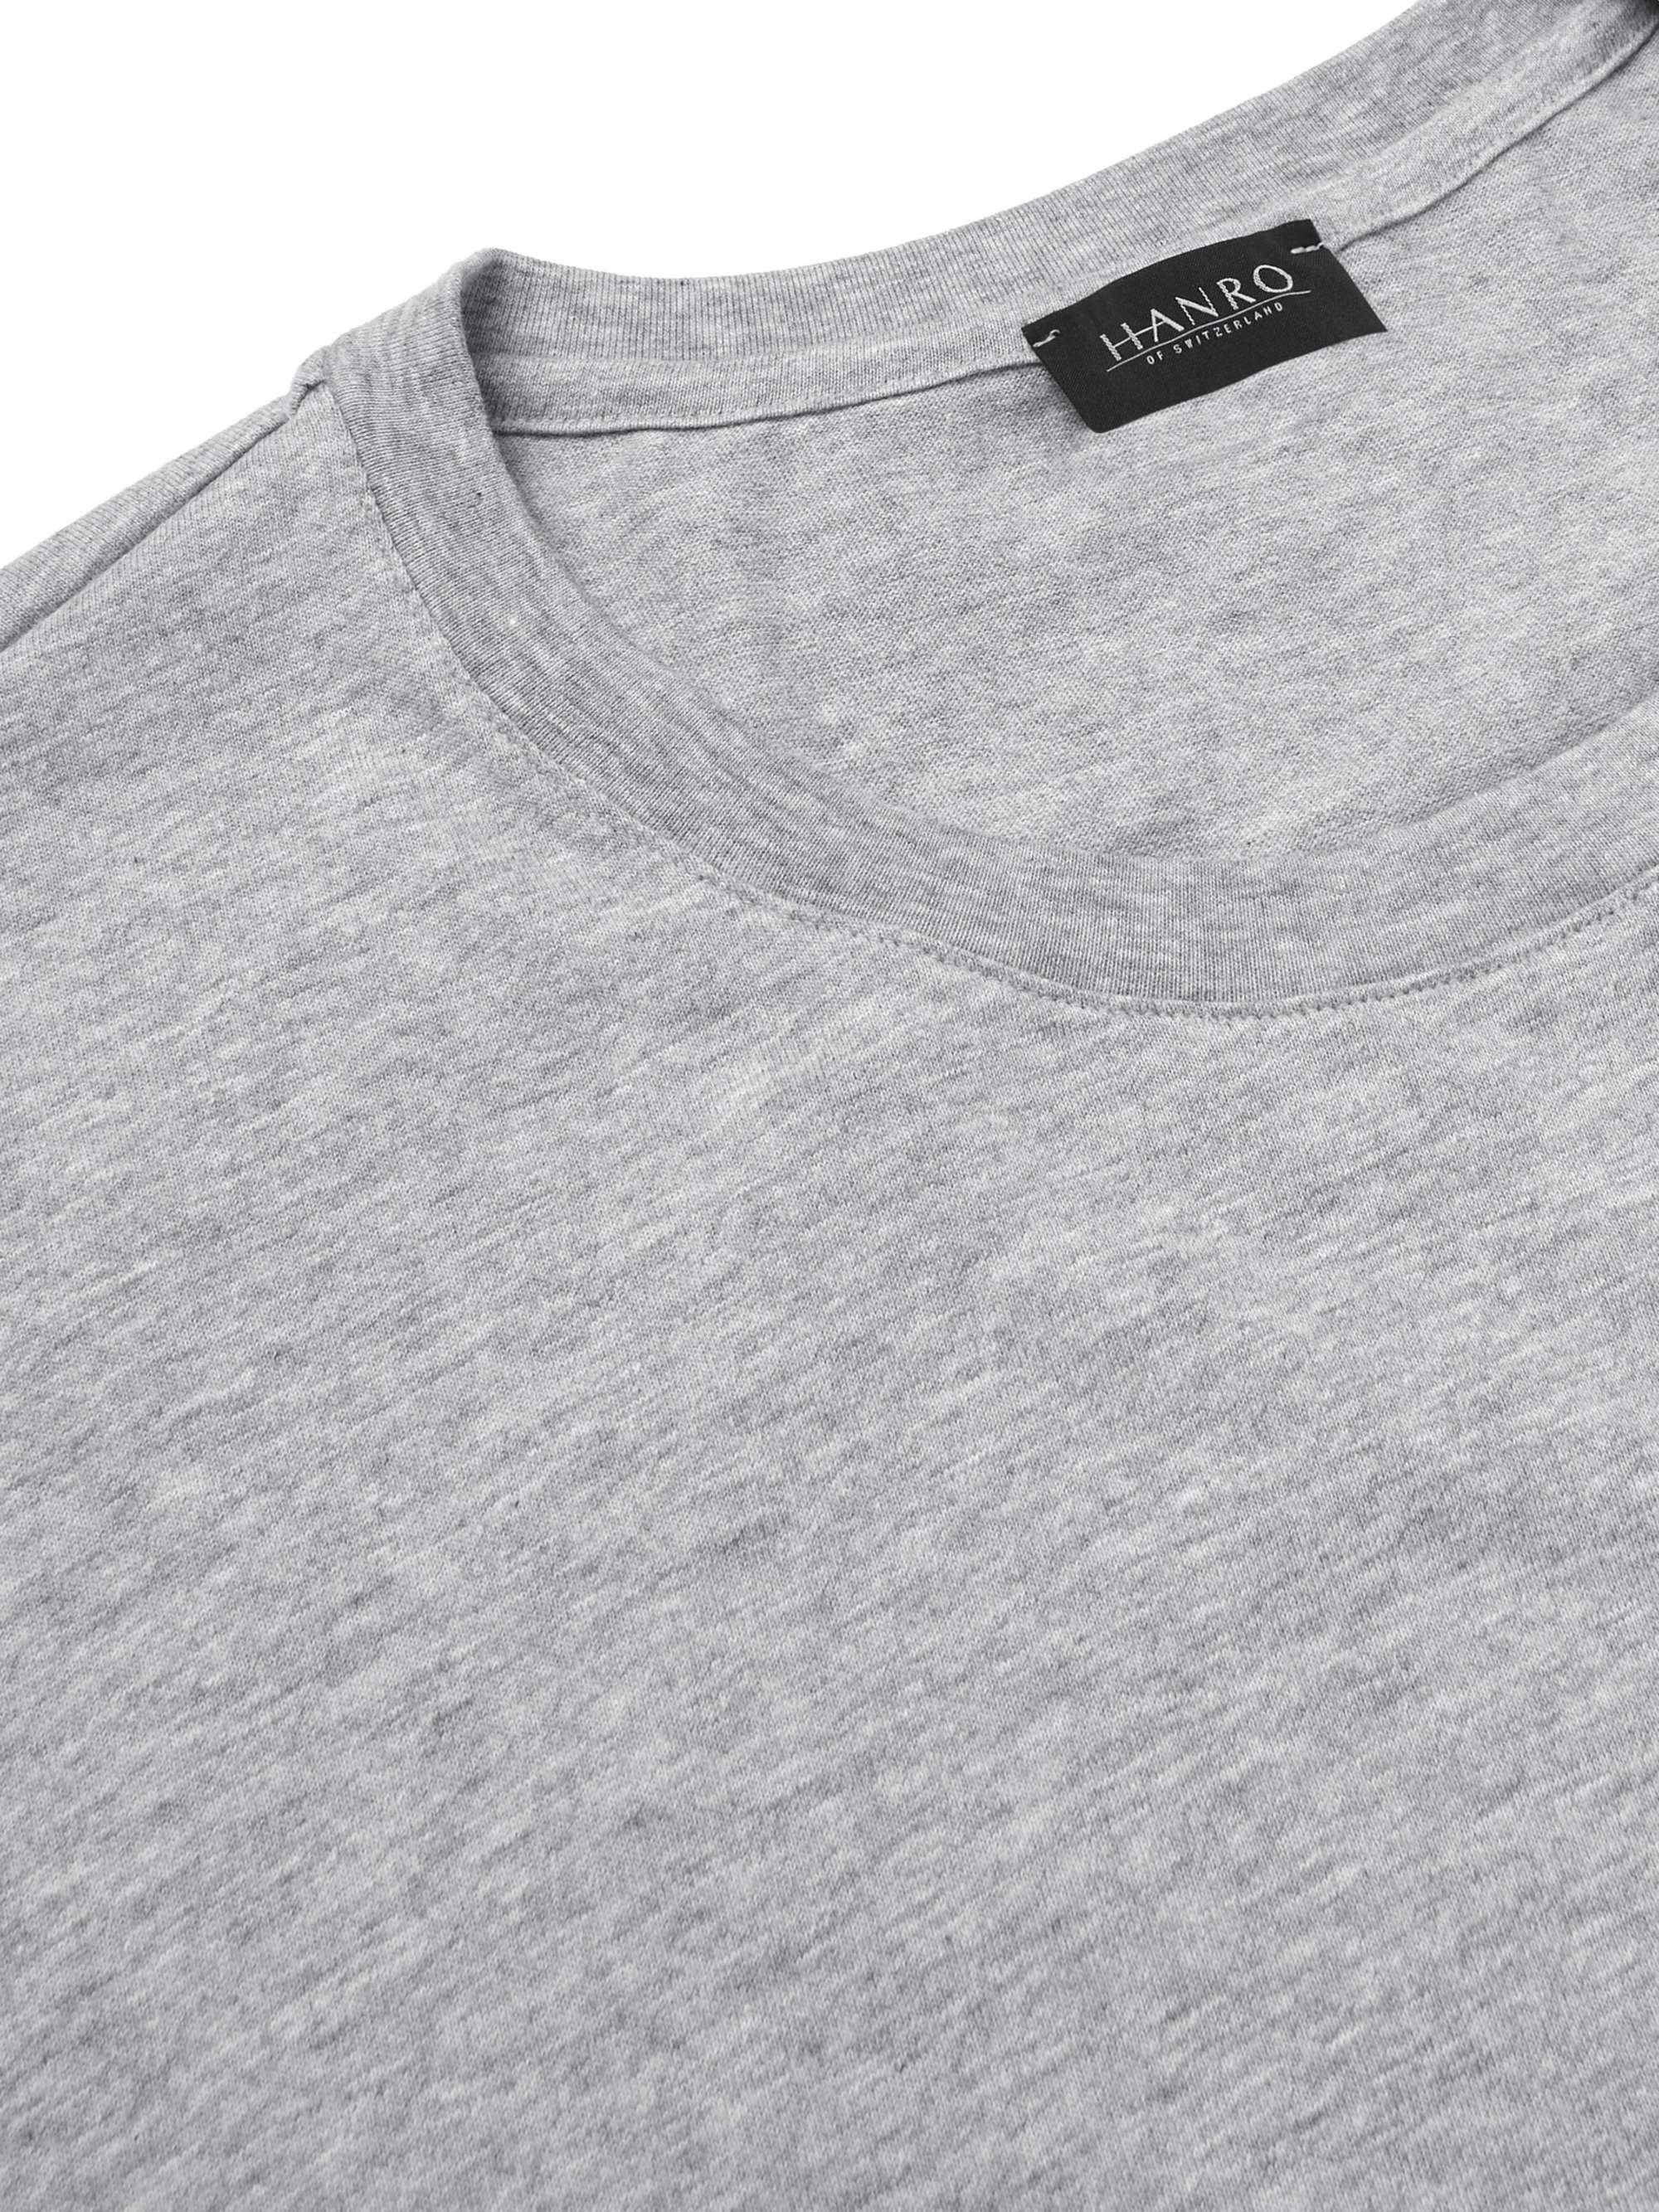 HANRO Cotton-Jersey T-Shirt